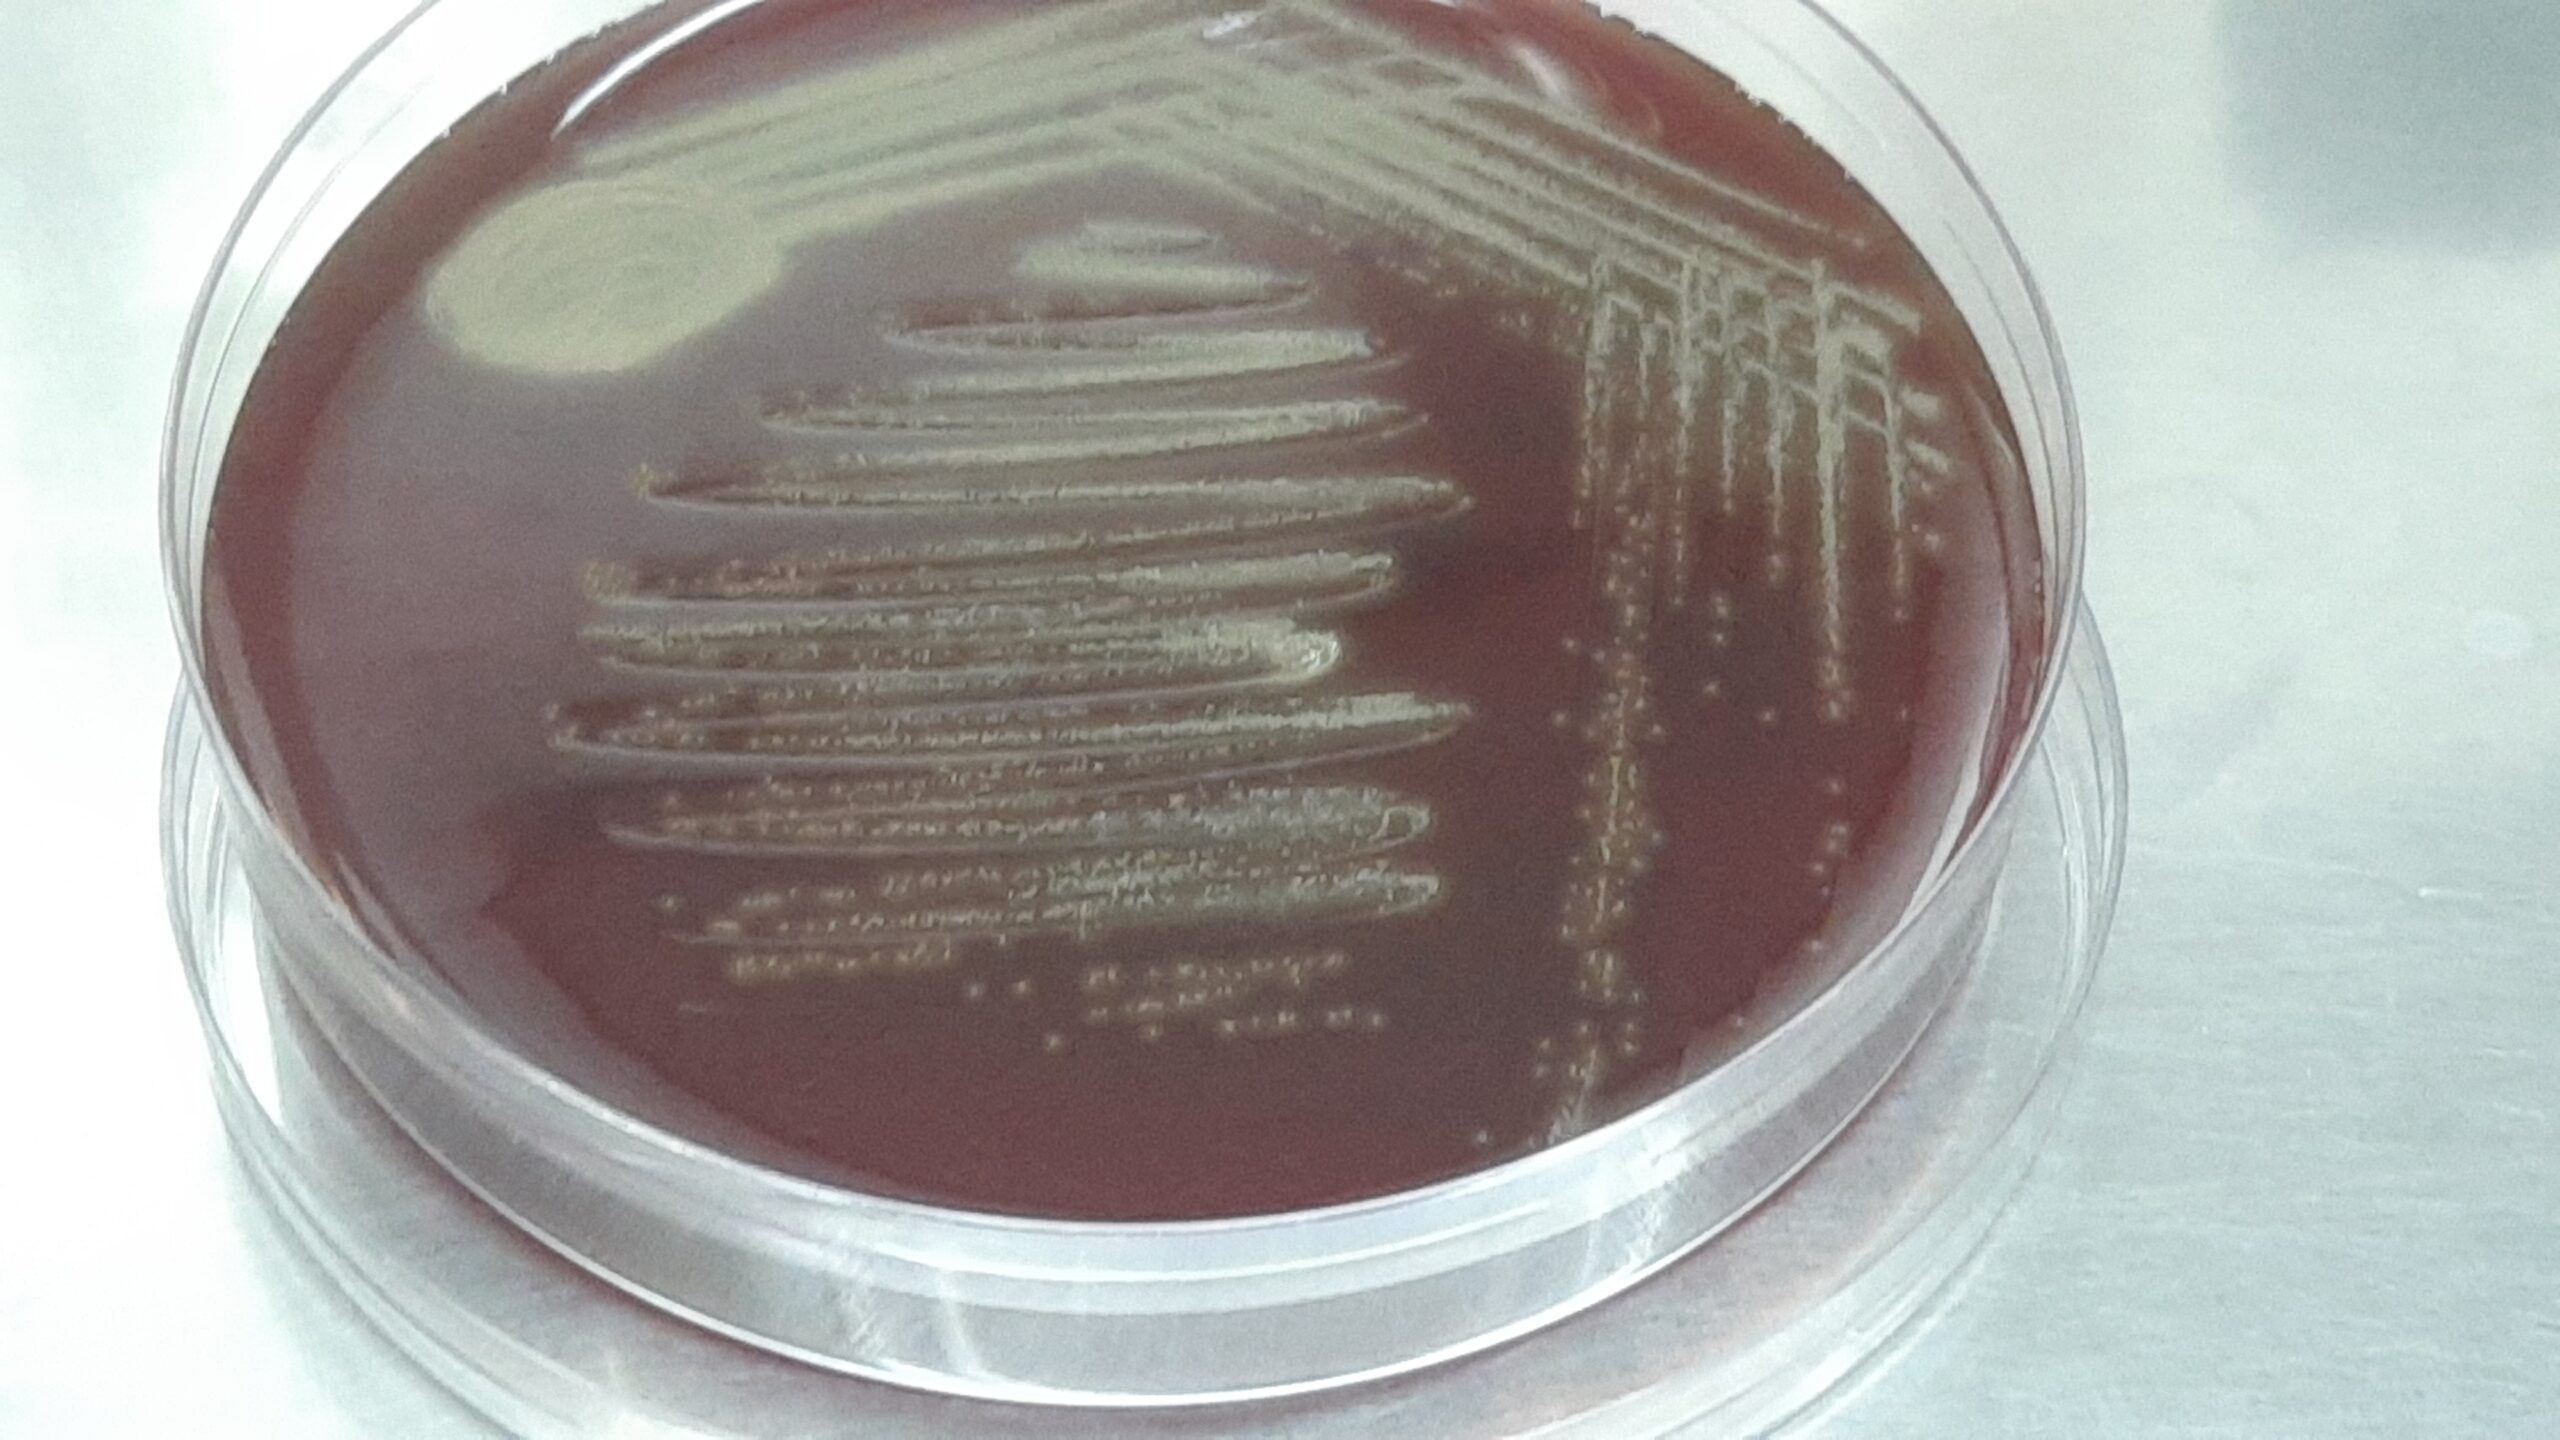 Gemella morbillorum colony morphology on blood agar of blood culture